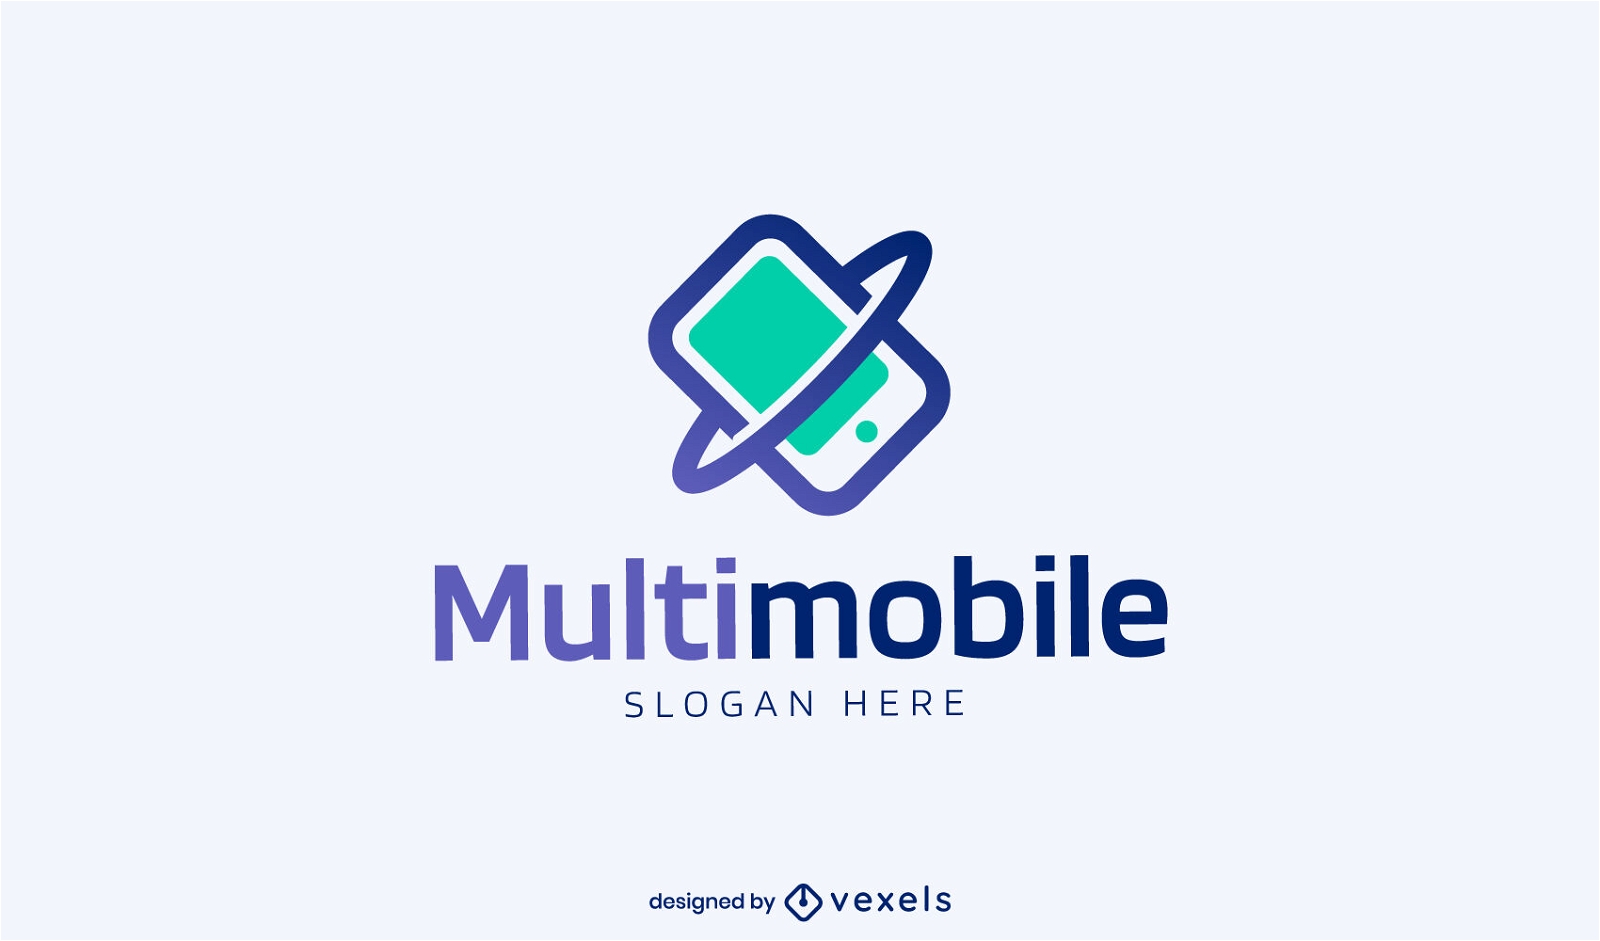 Modelo de logotipo de tecnologia móvel para celular